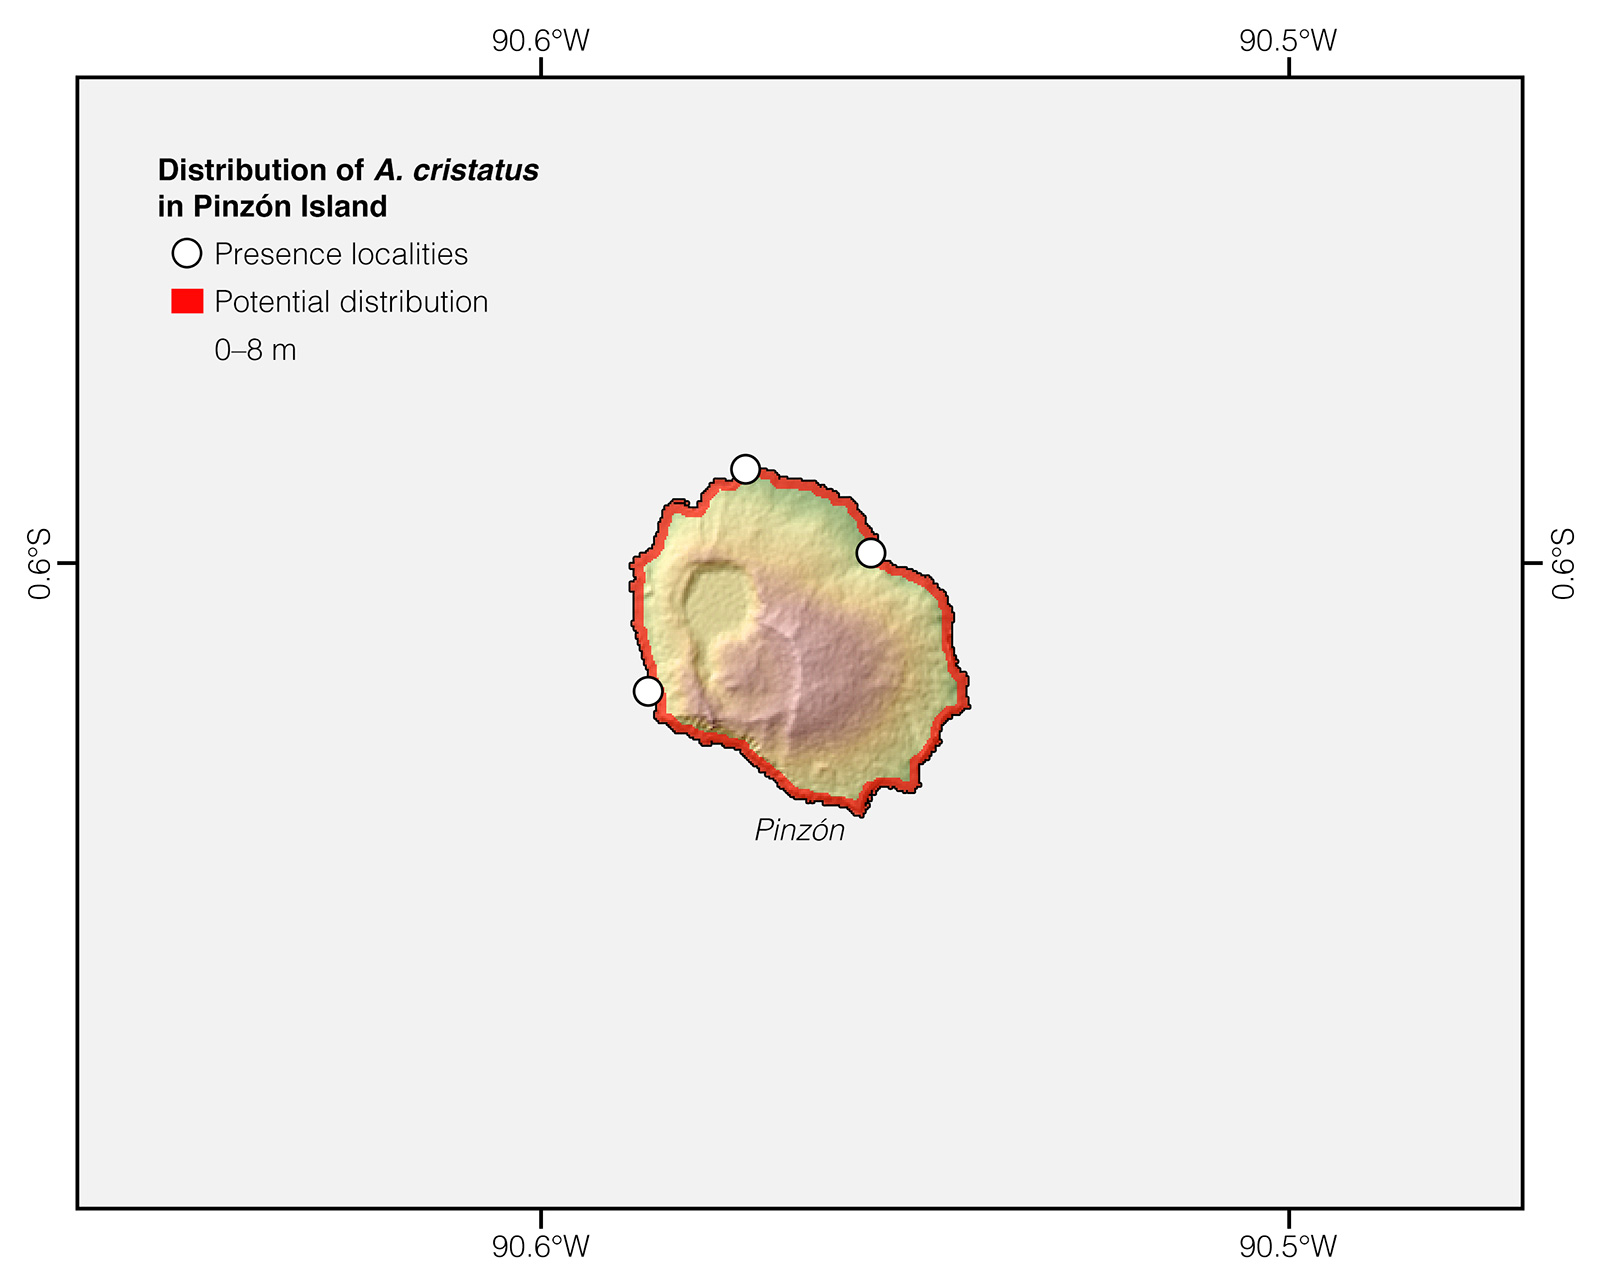 Distribution of Amblyrhynchus cristatus in Pinzón Island